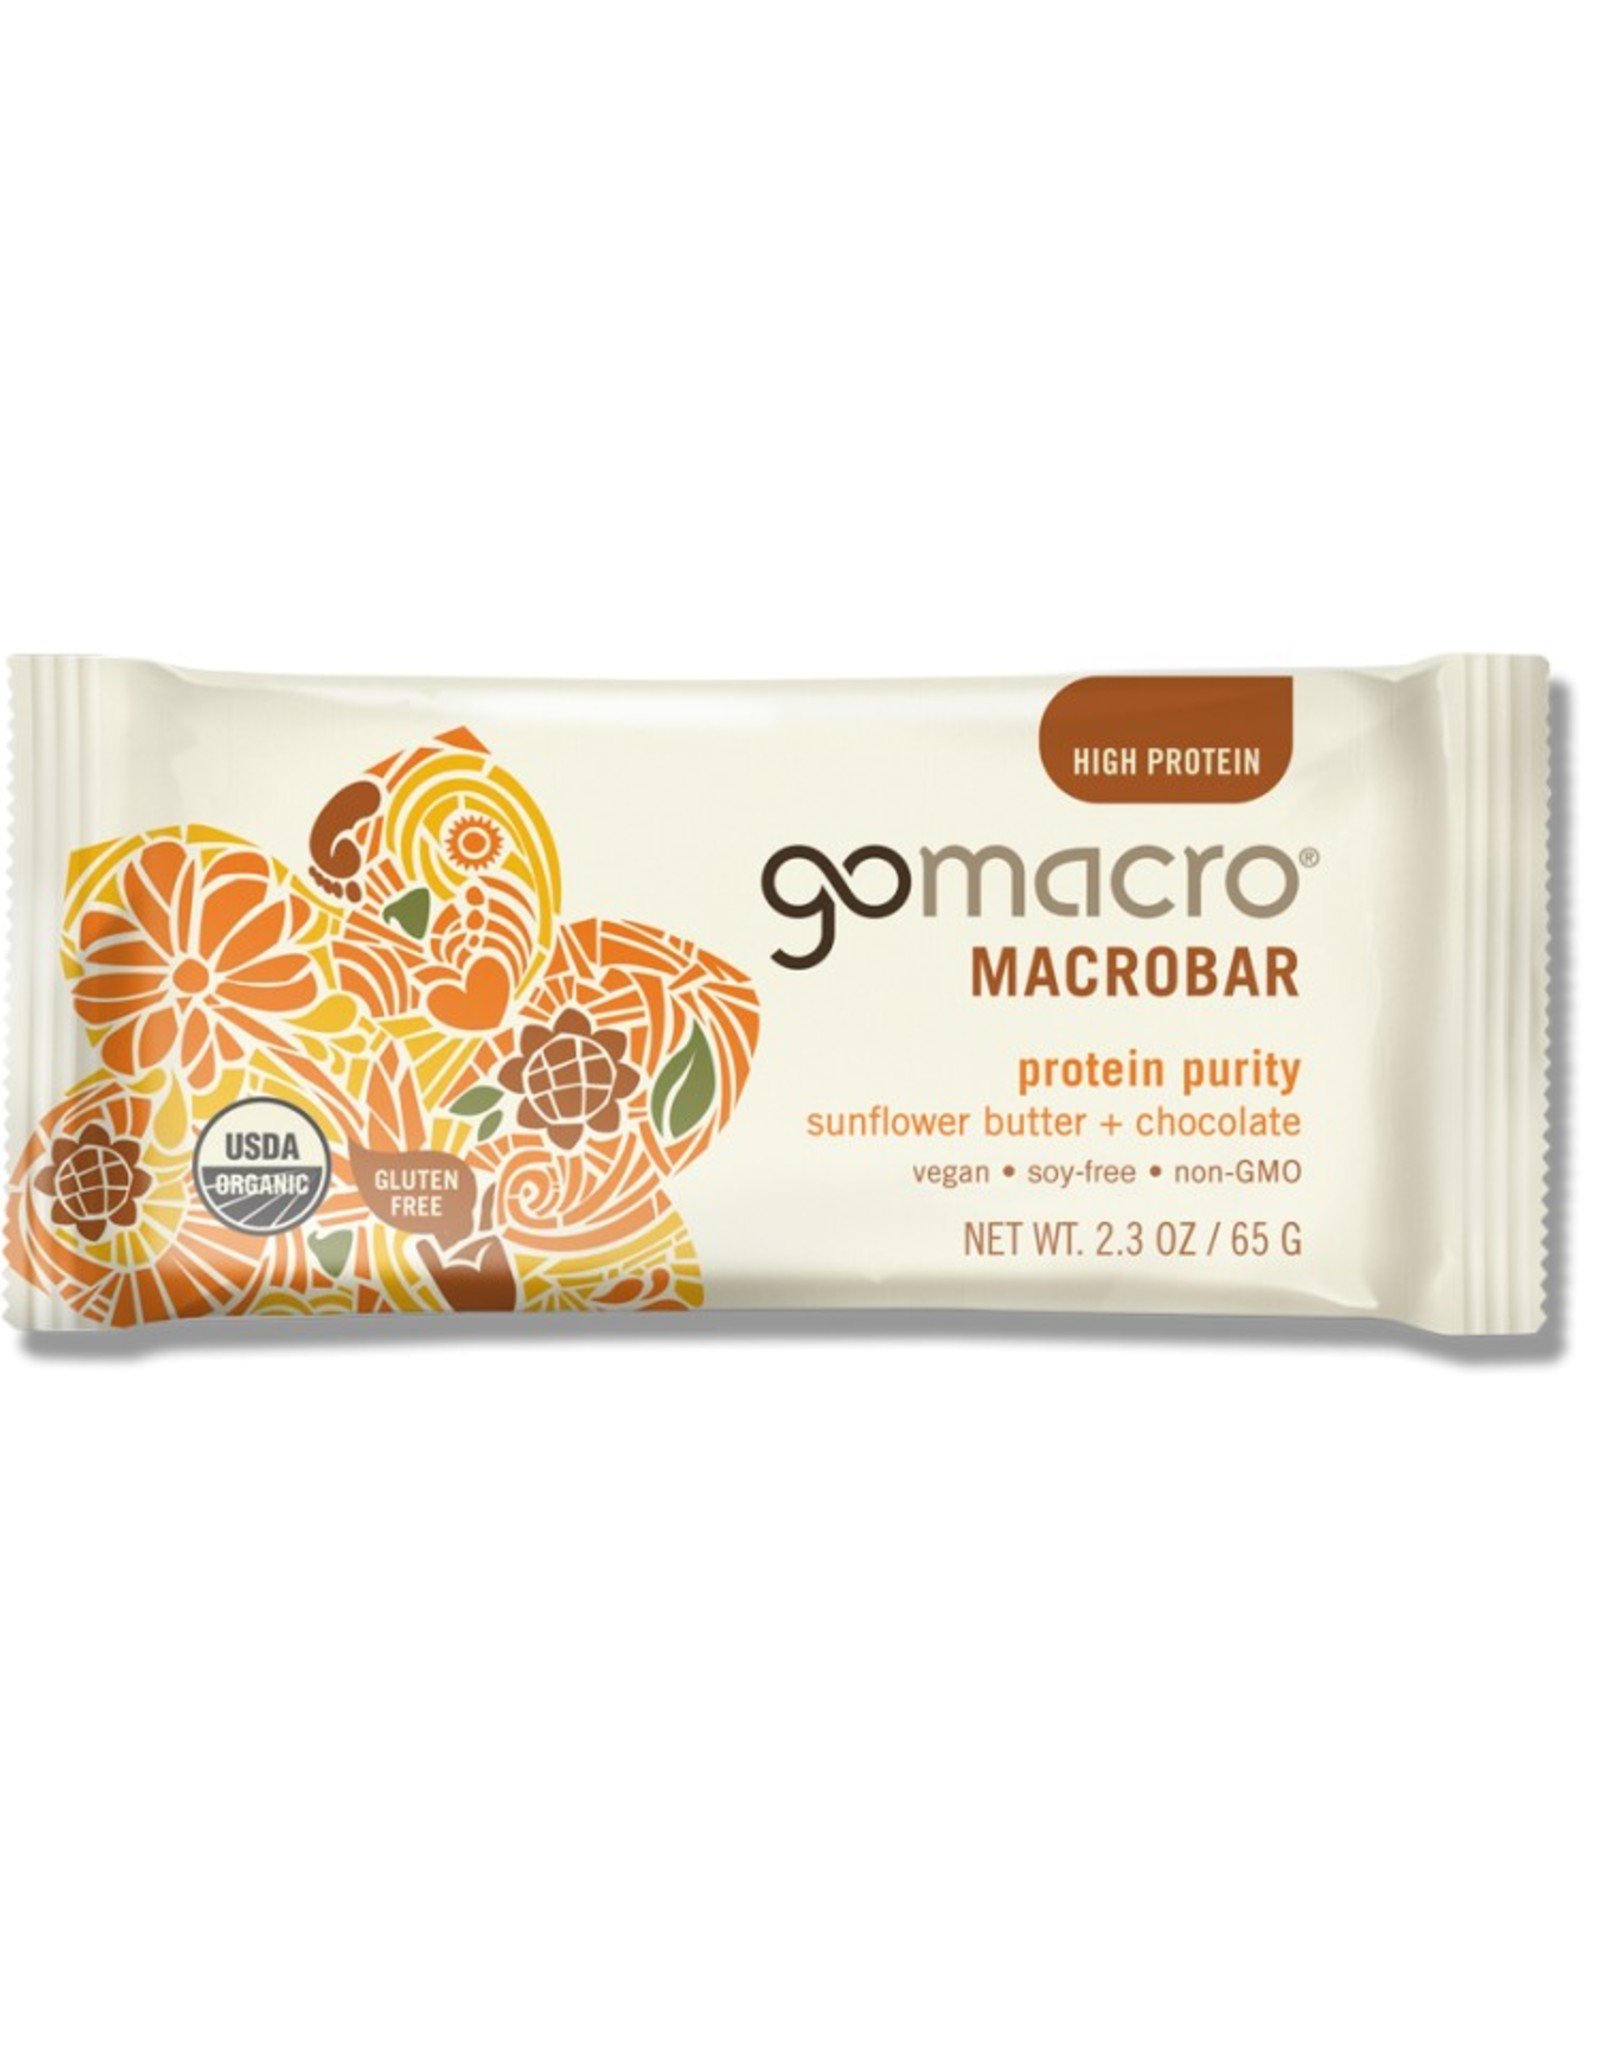 GoMacro Macrobar